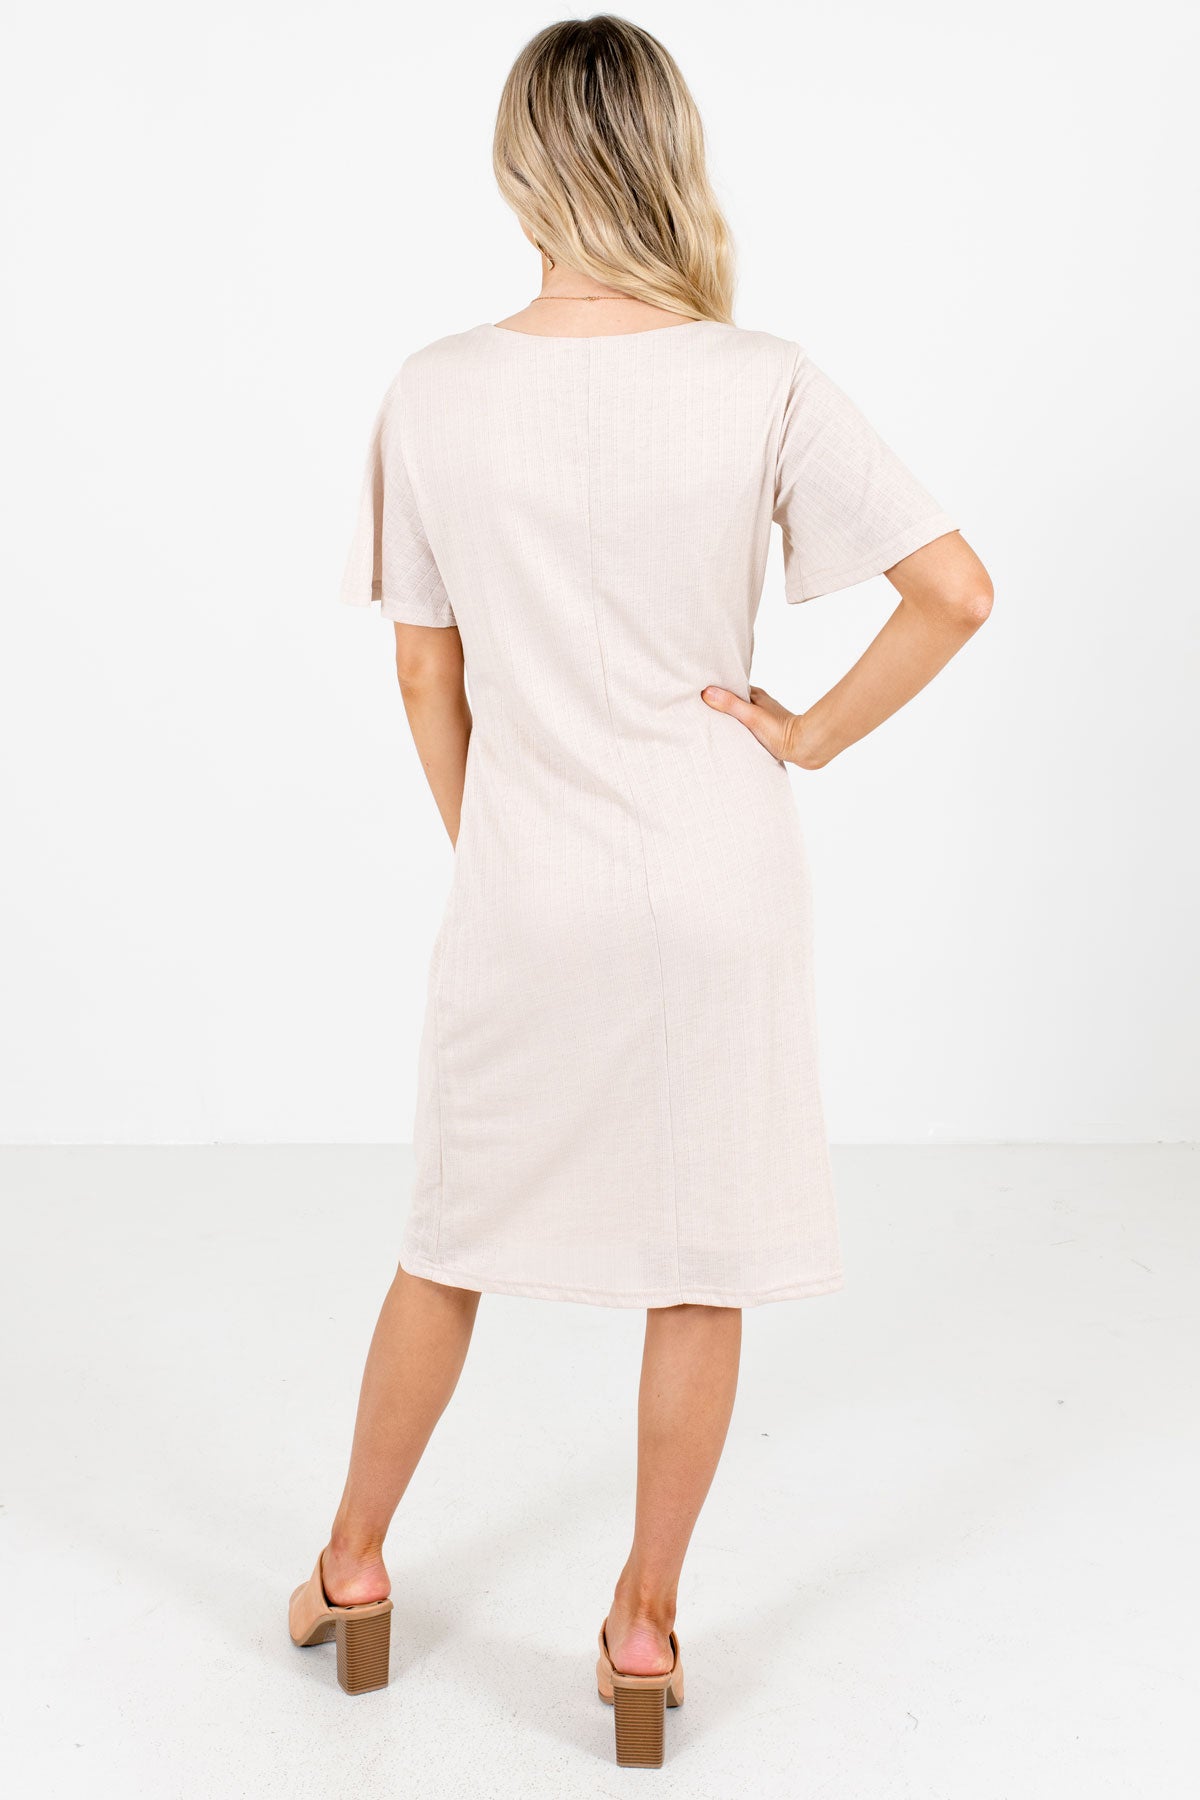 Women's Beige V-Neckline Boutique Knee-Length Dress